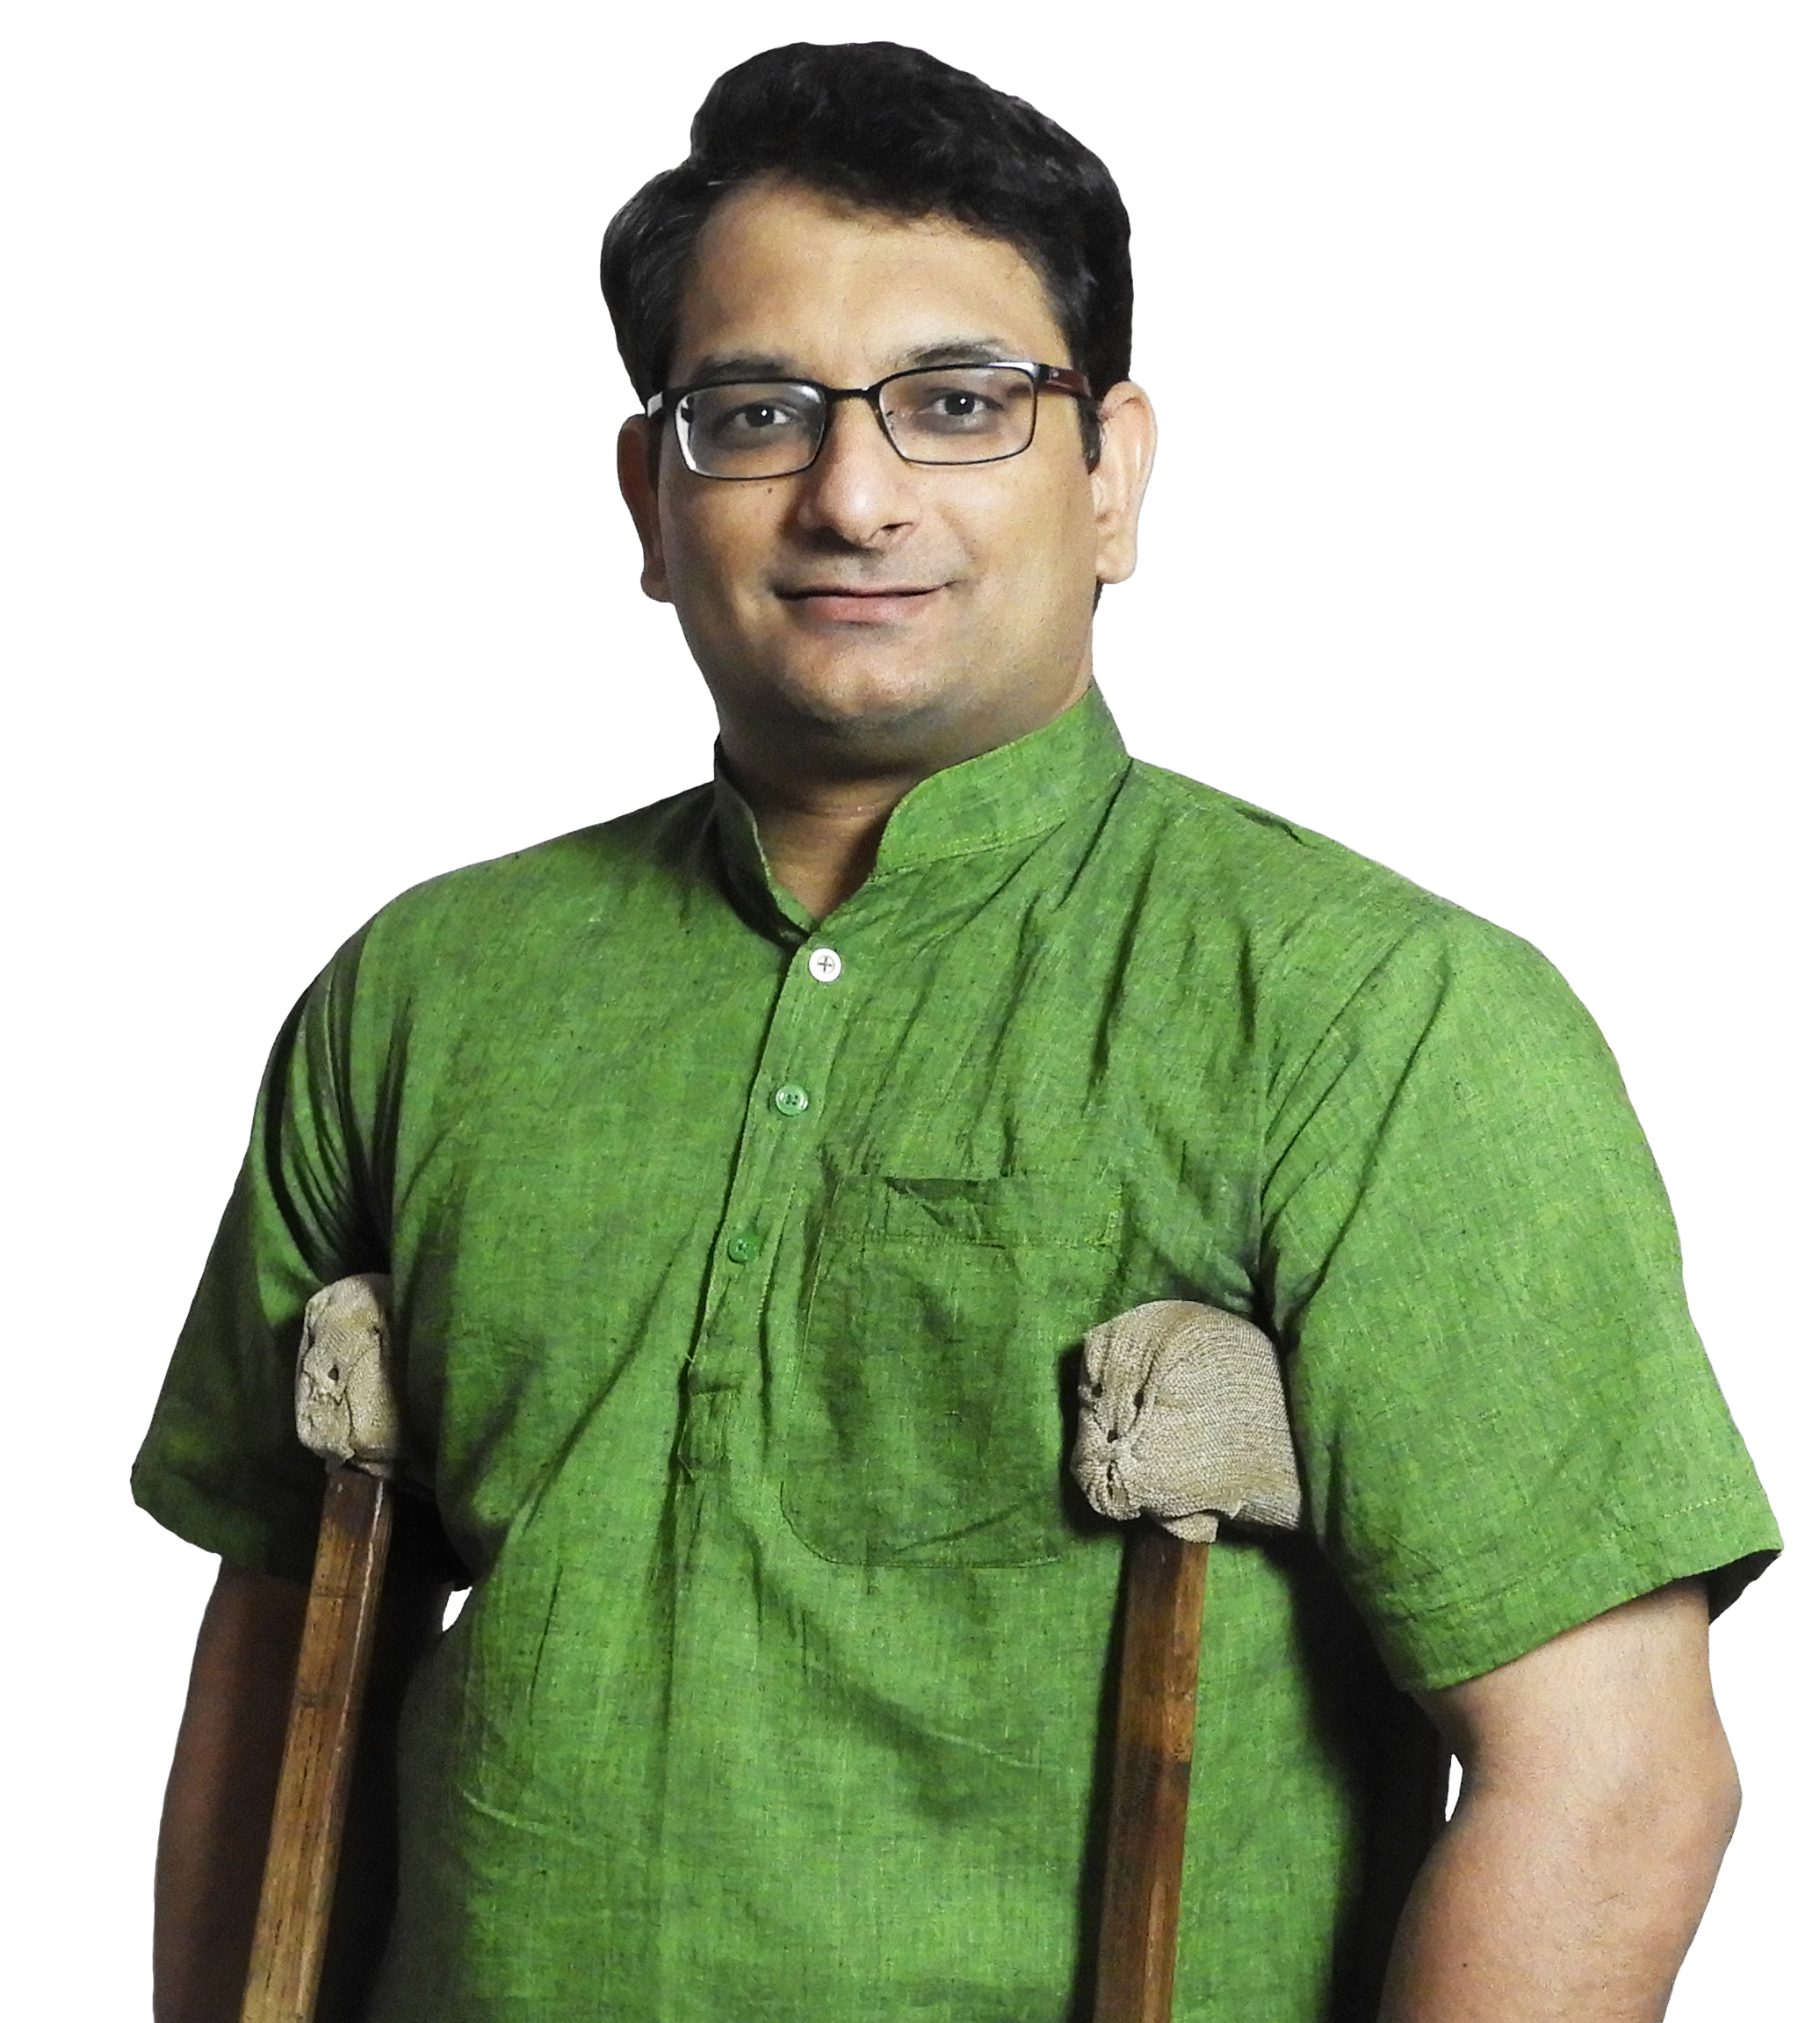 International Honour for India Disability Rights Activist, Lalit Kumar Samyak